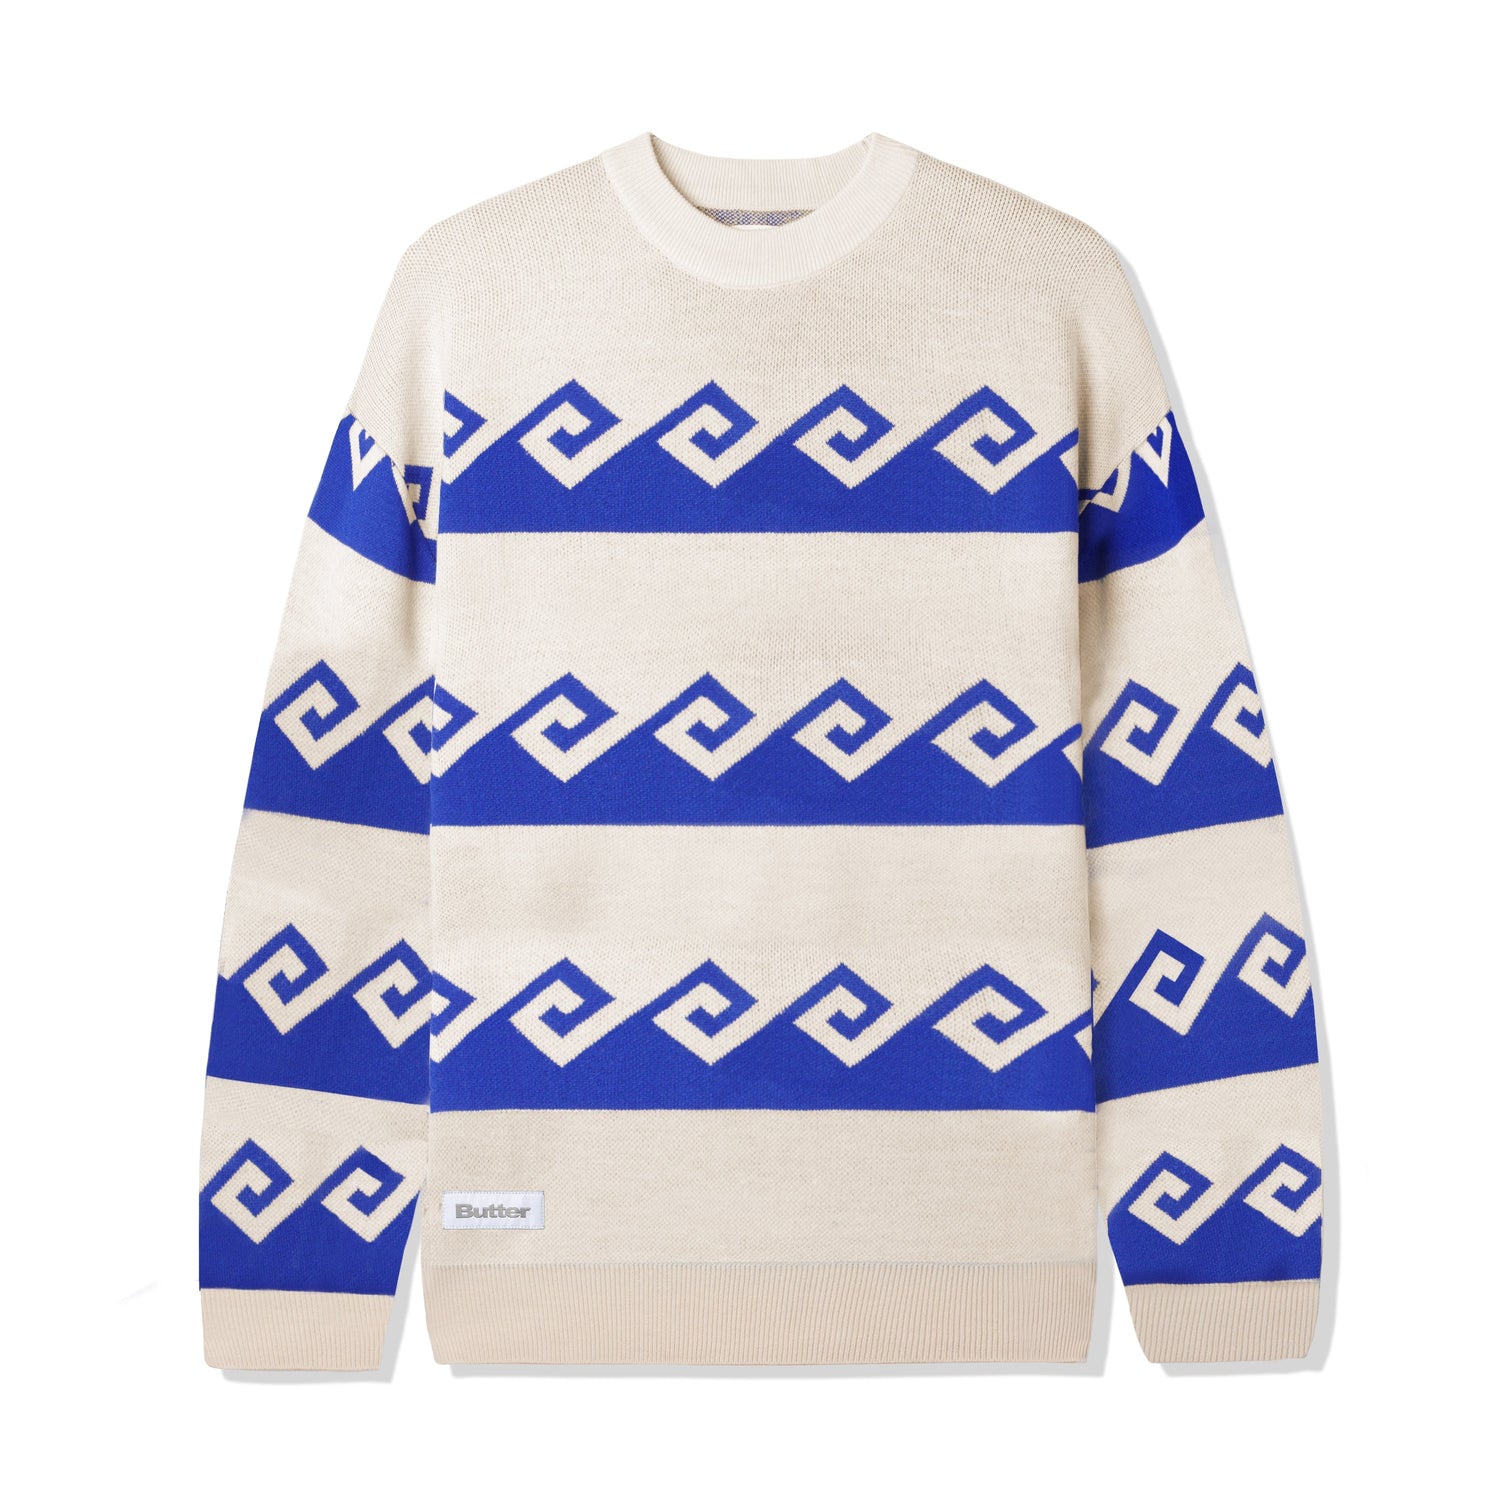 Waves Knit Sweater, Cream